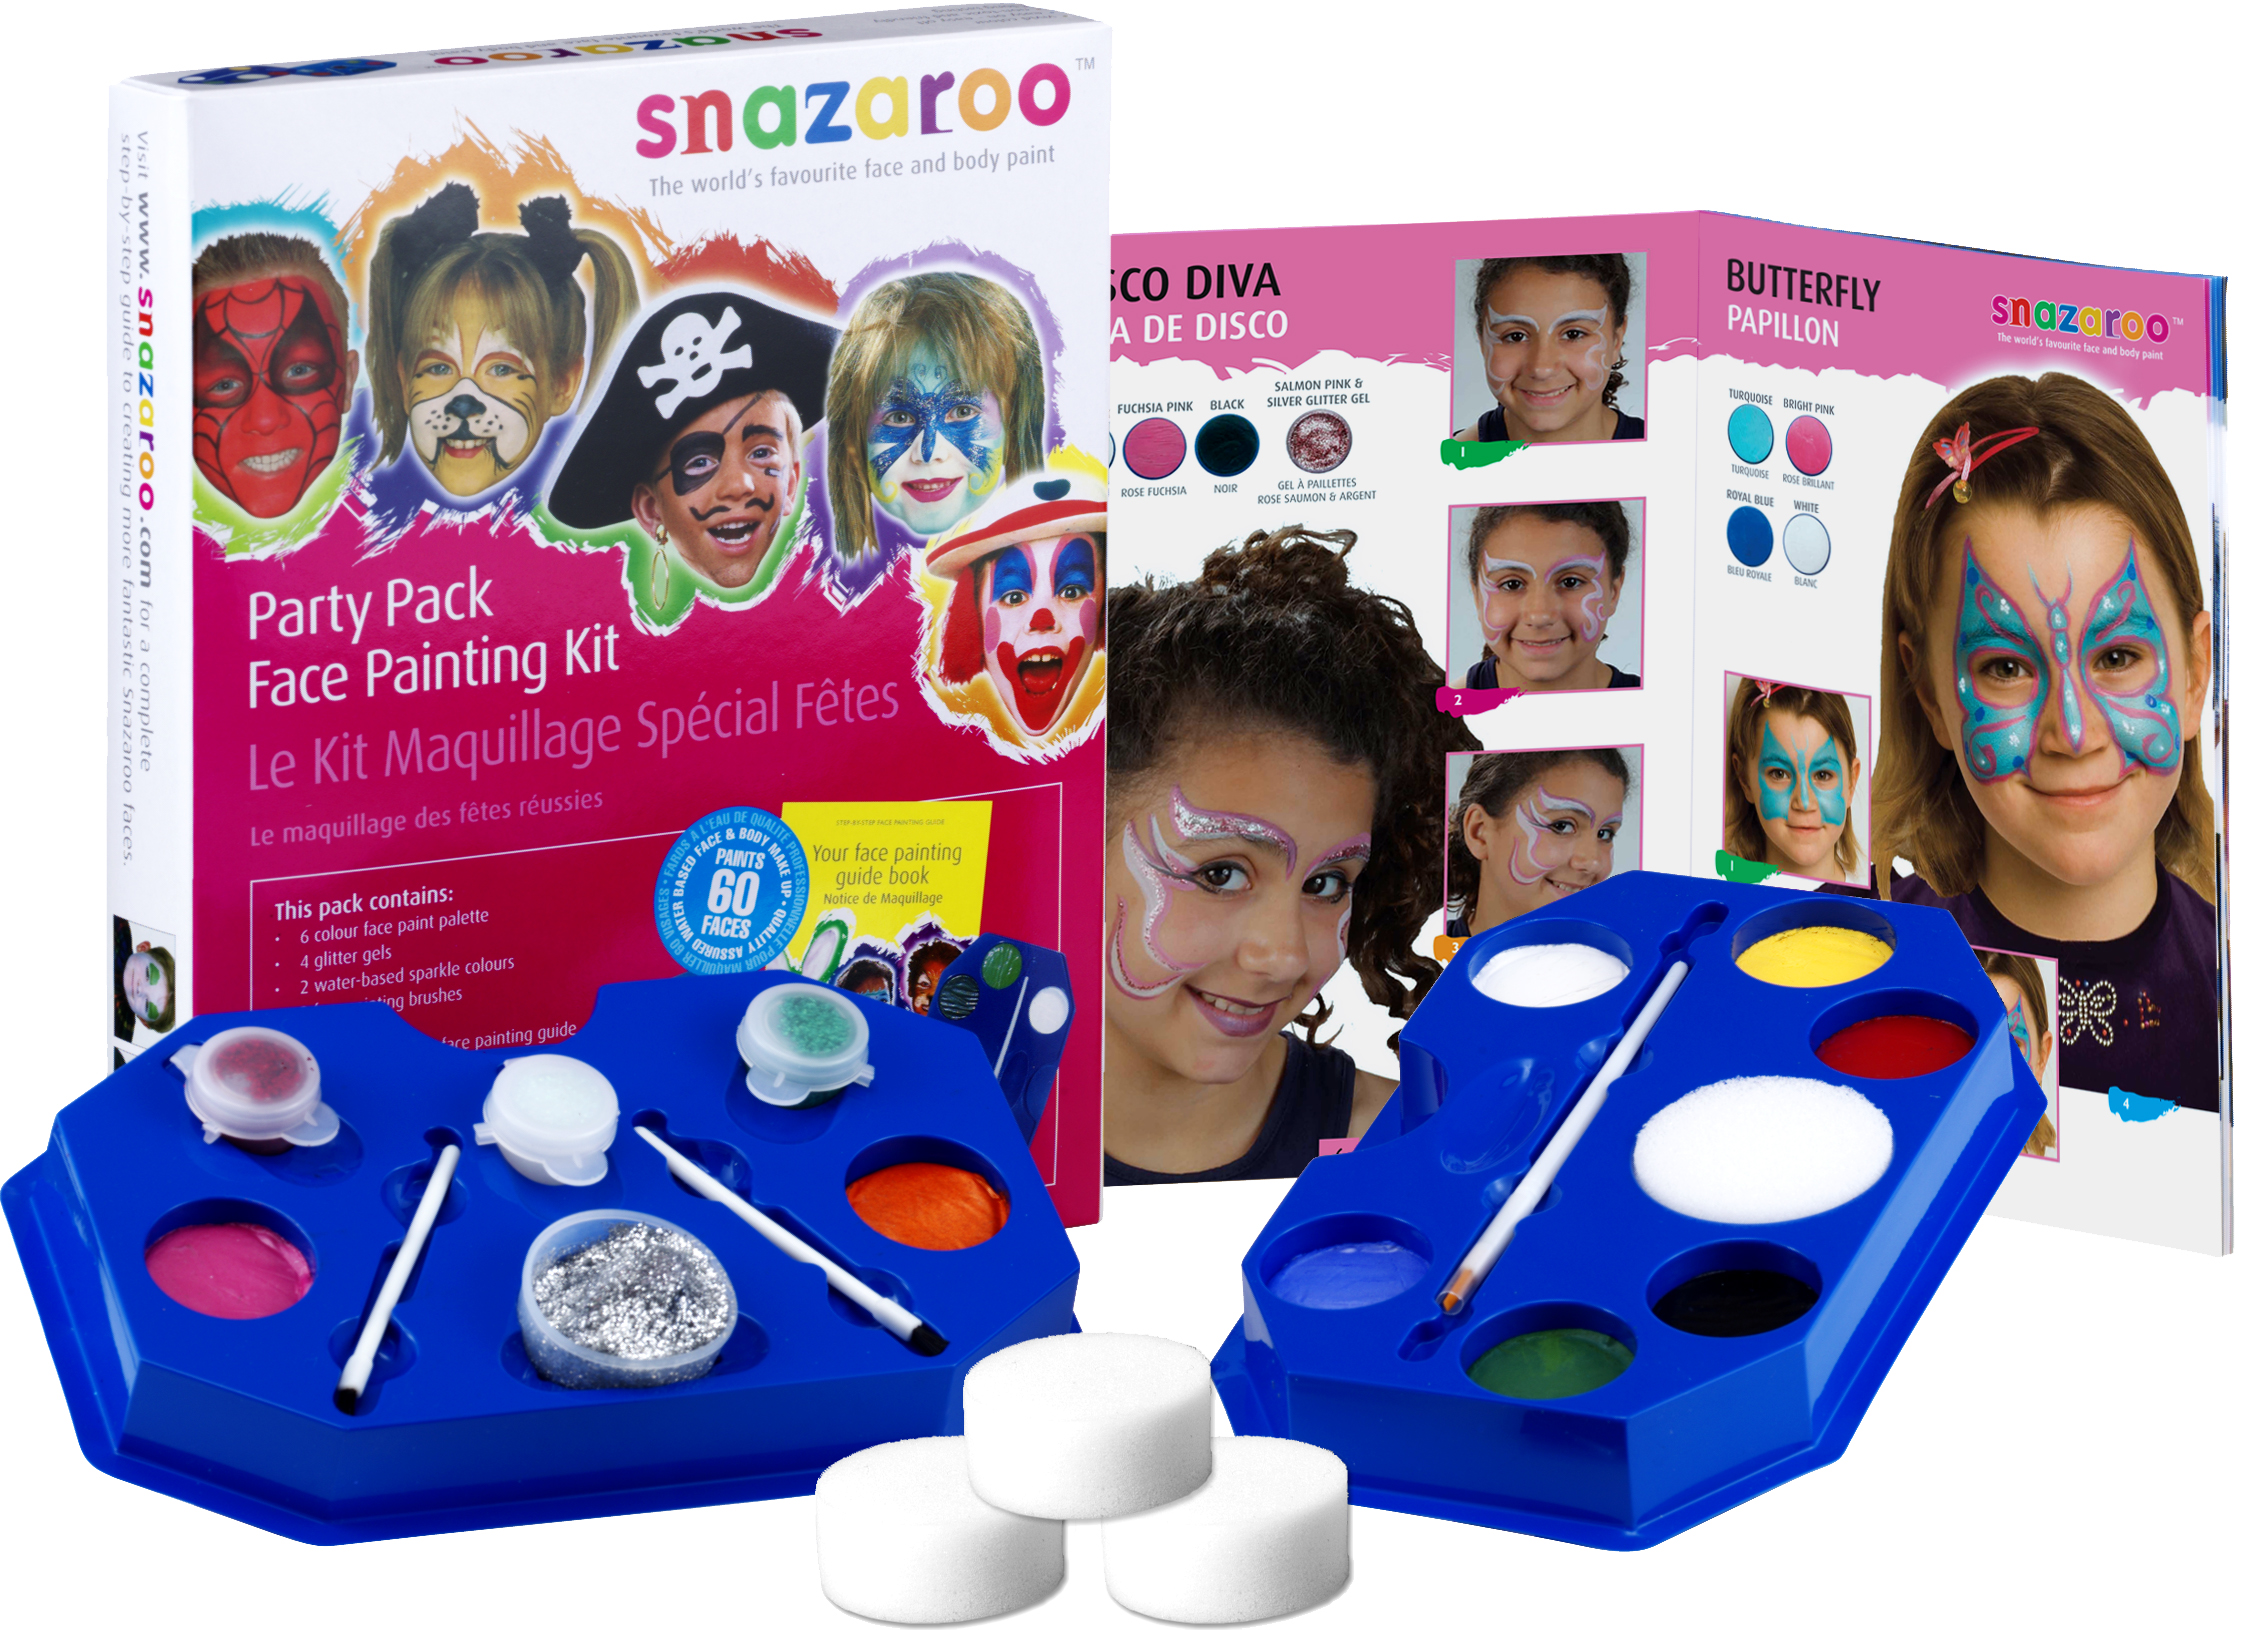 Sanzaroo face-painting kits